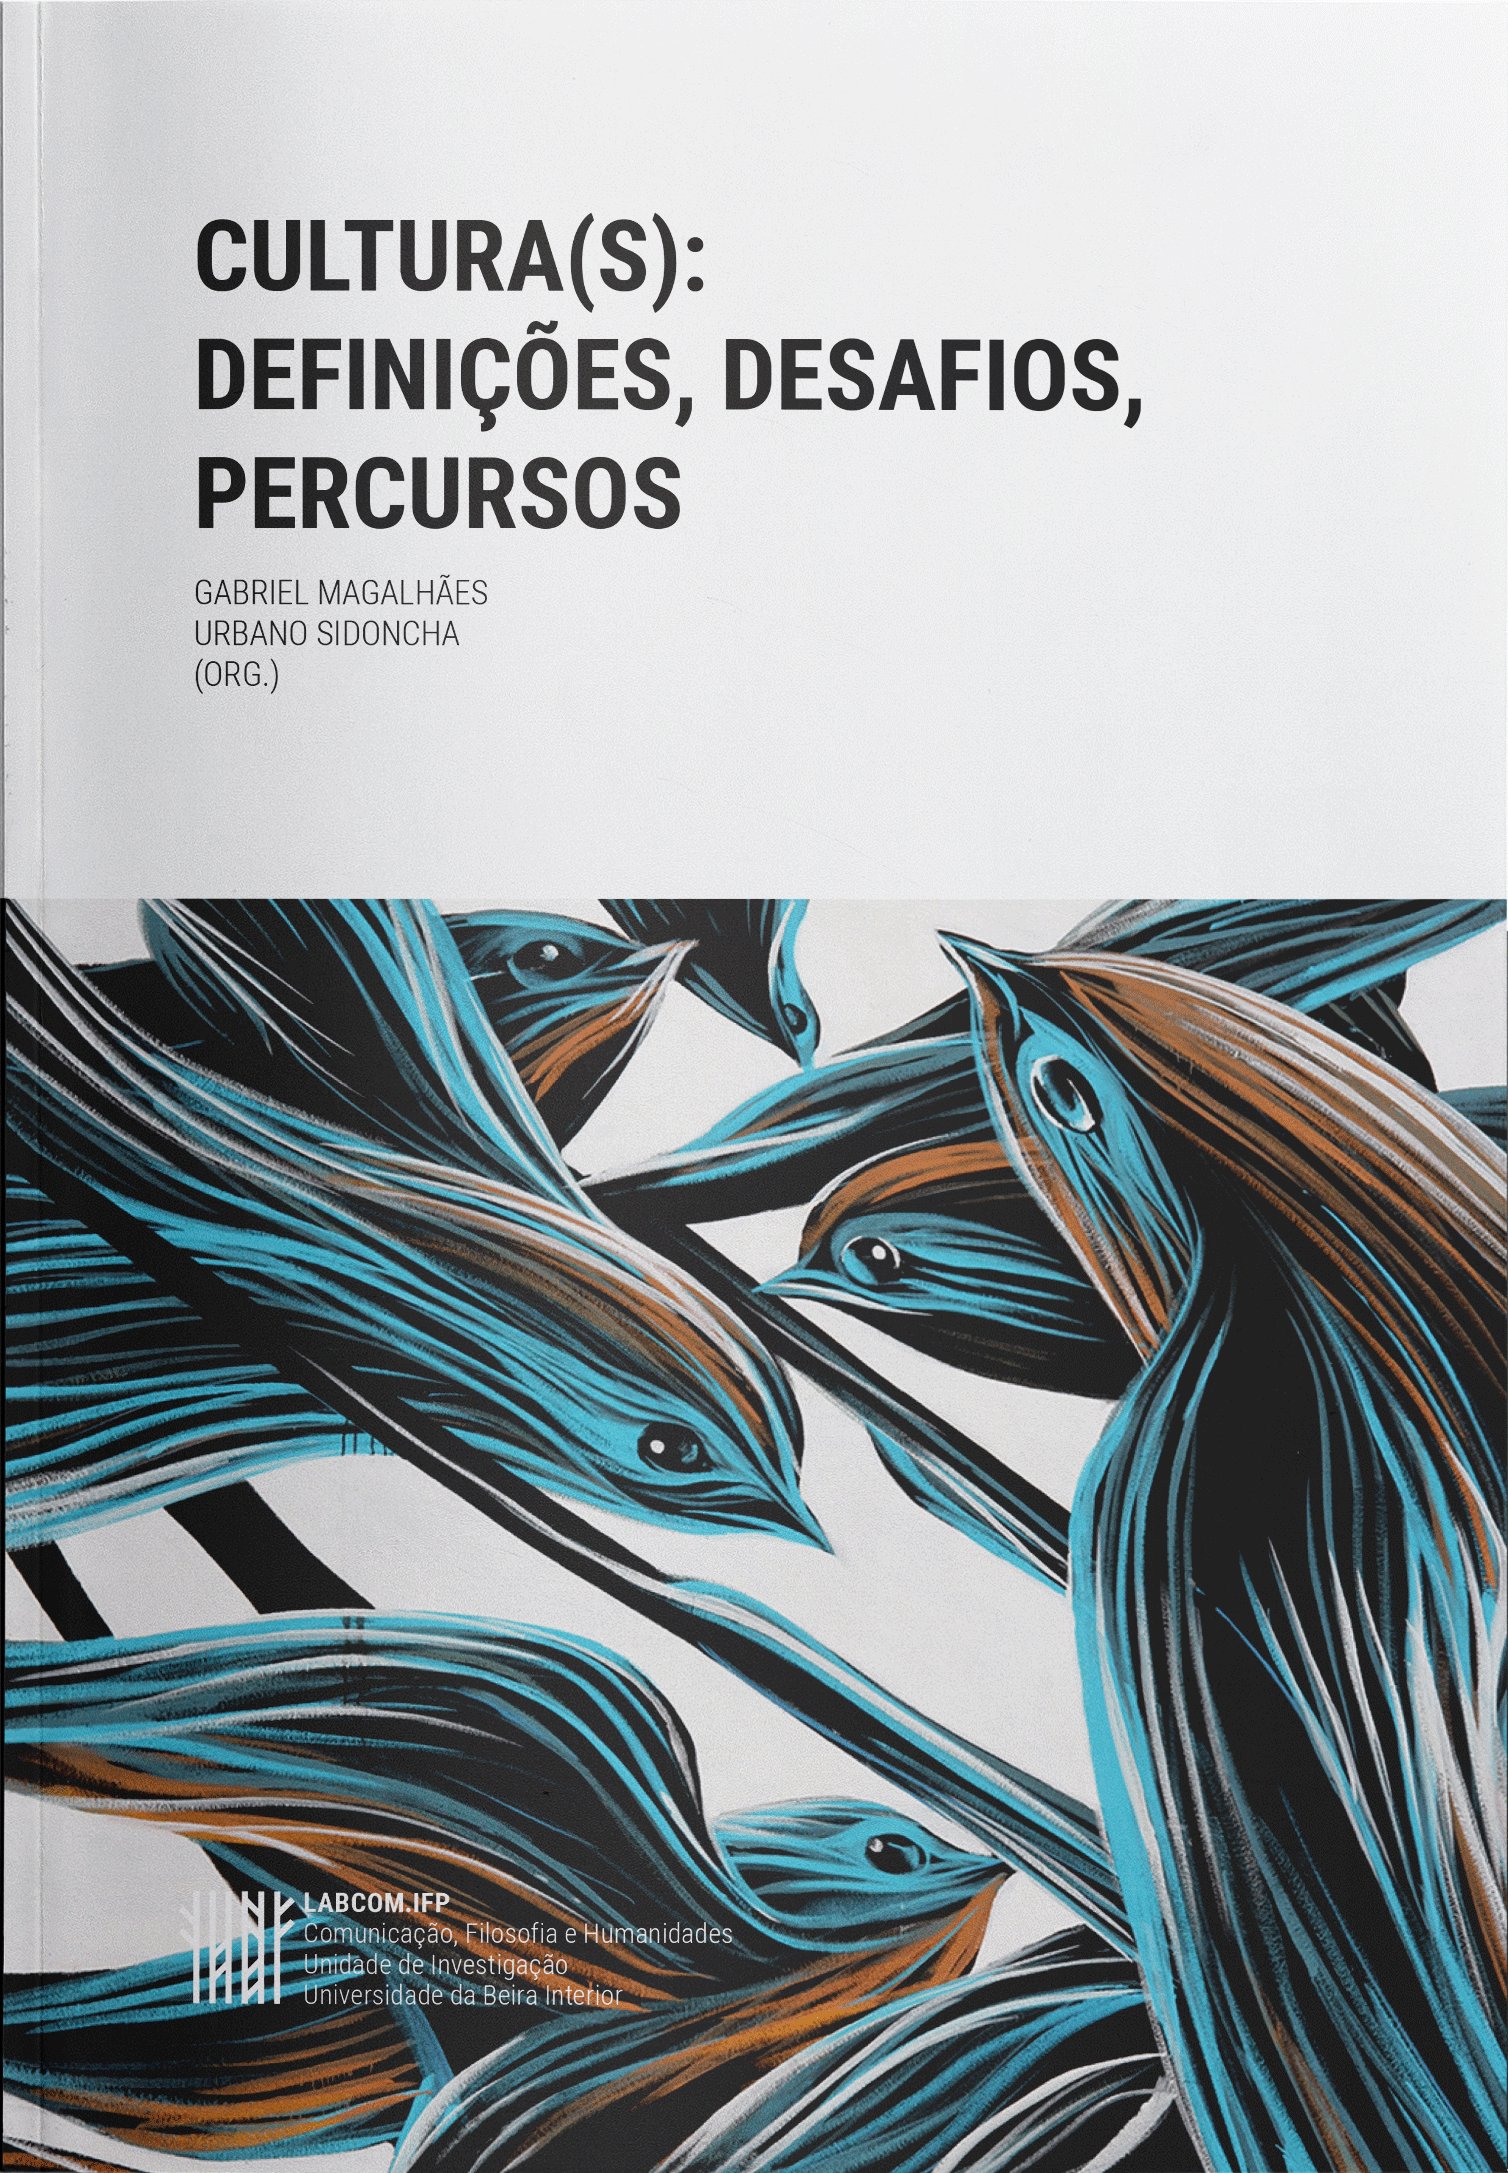 Capa: Gabriel Magalhães e Urbano Sidoncha (Org.) (2018) Cultura(S): Definições, Desafios, Percursos. Communication  +  Philosophy  +  Humanities. .